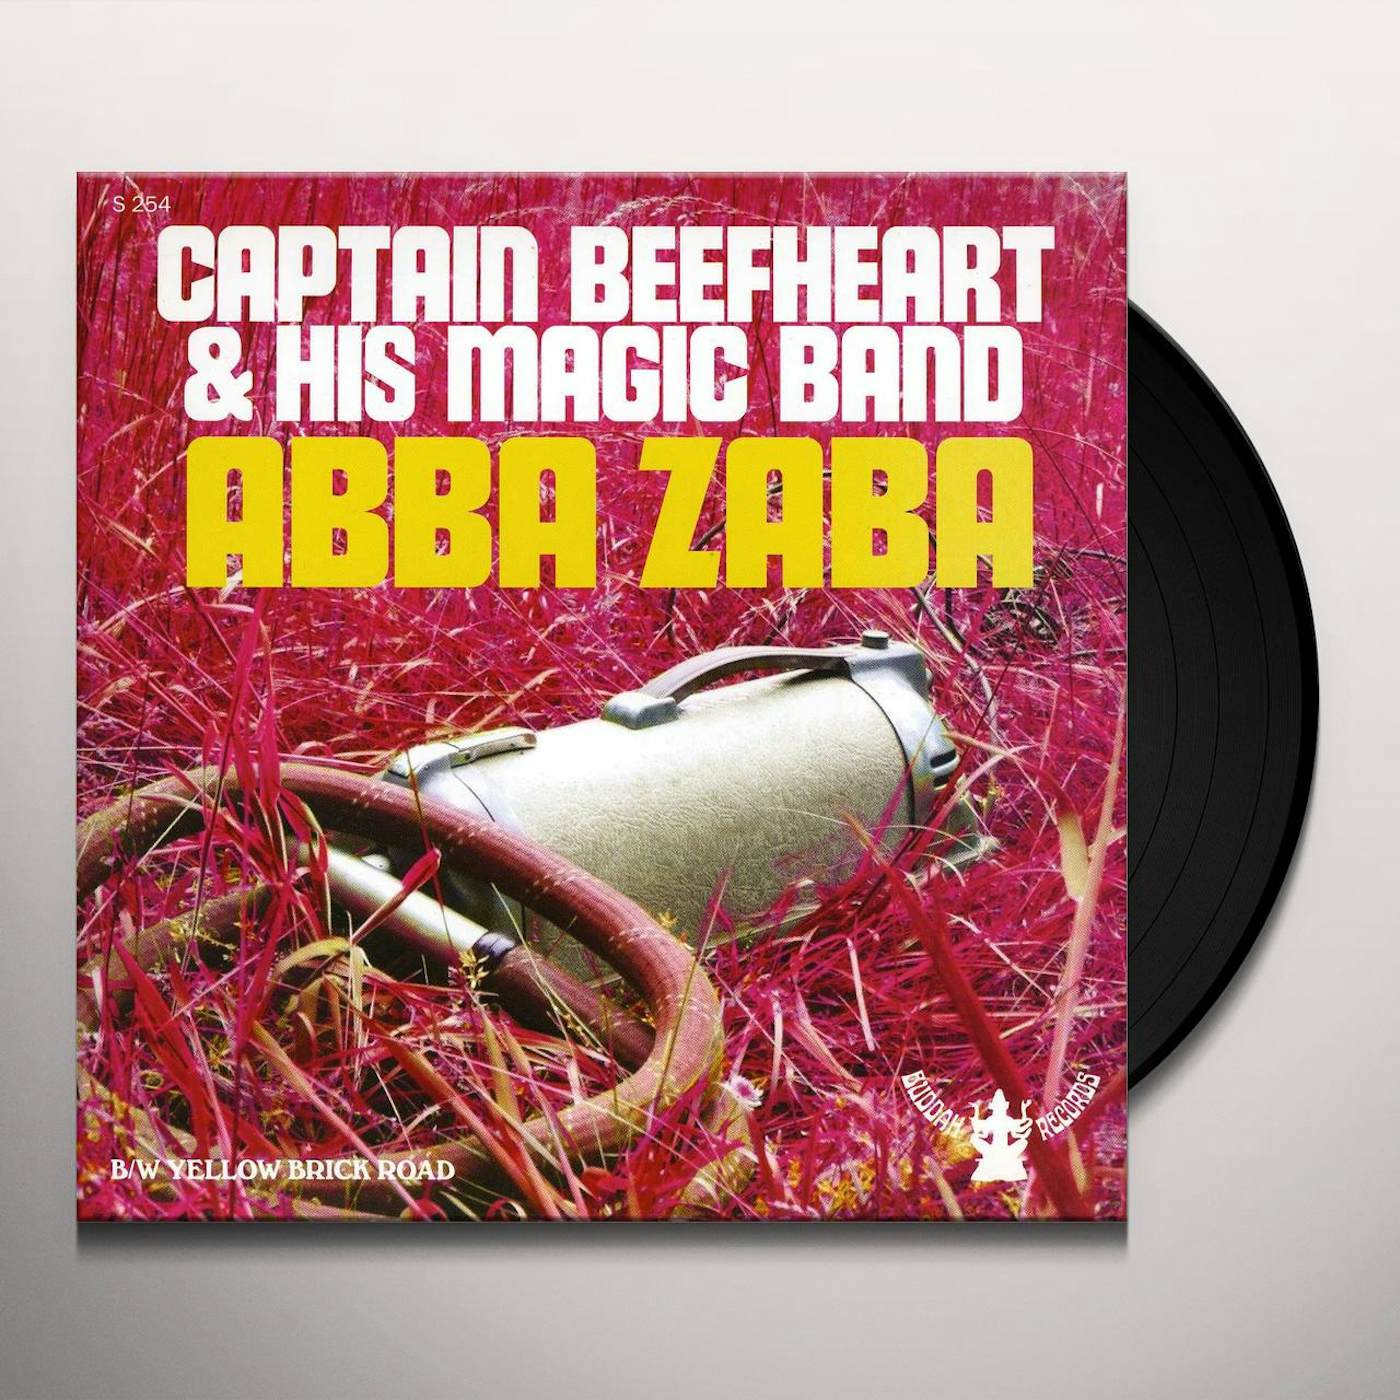 Captain Beefheart & His Magic Band ABBA ZABA Vinyl Record